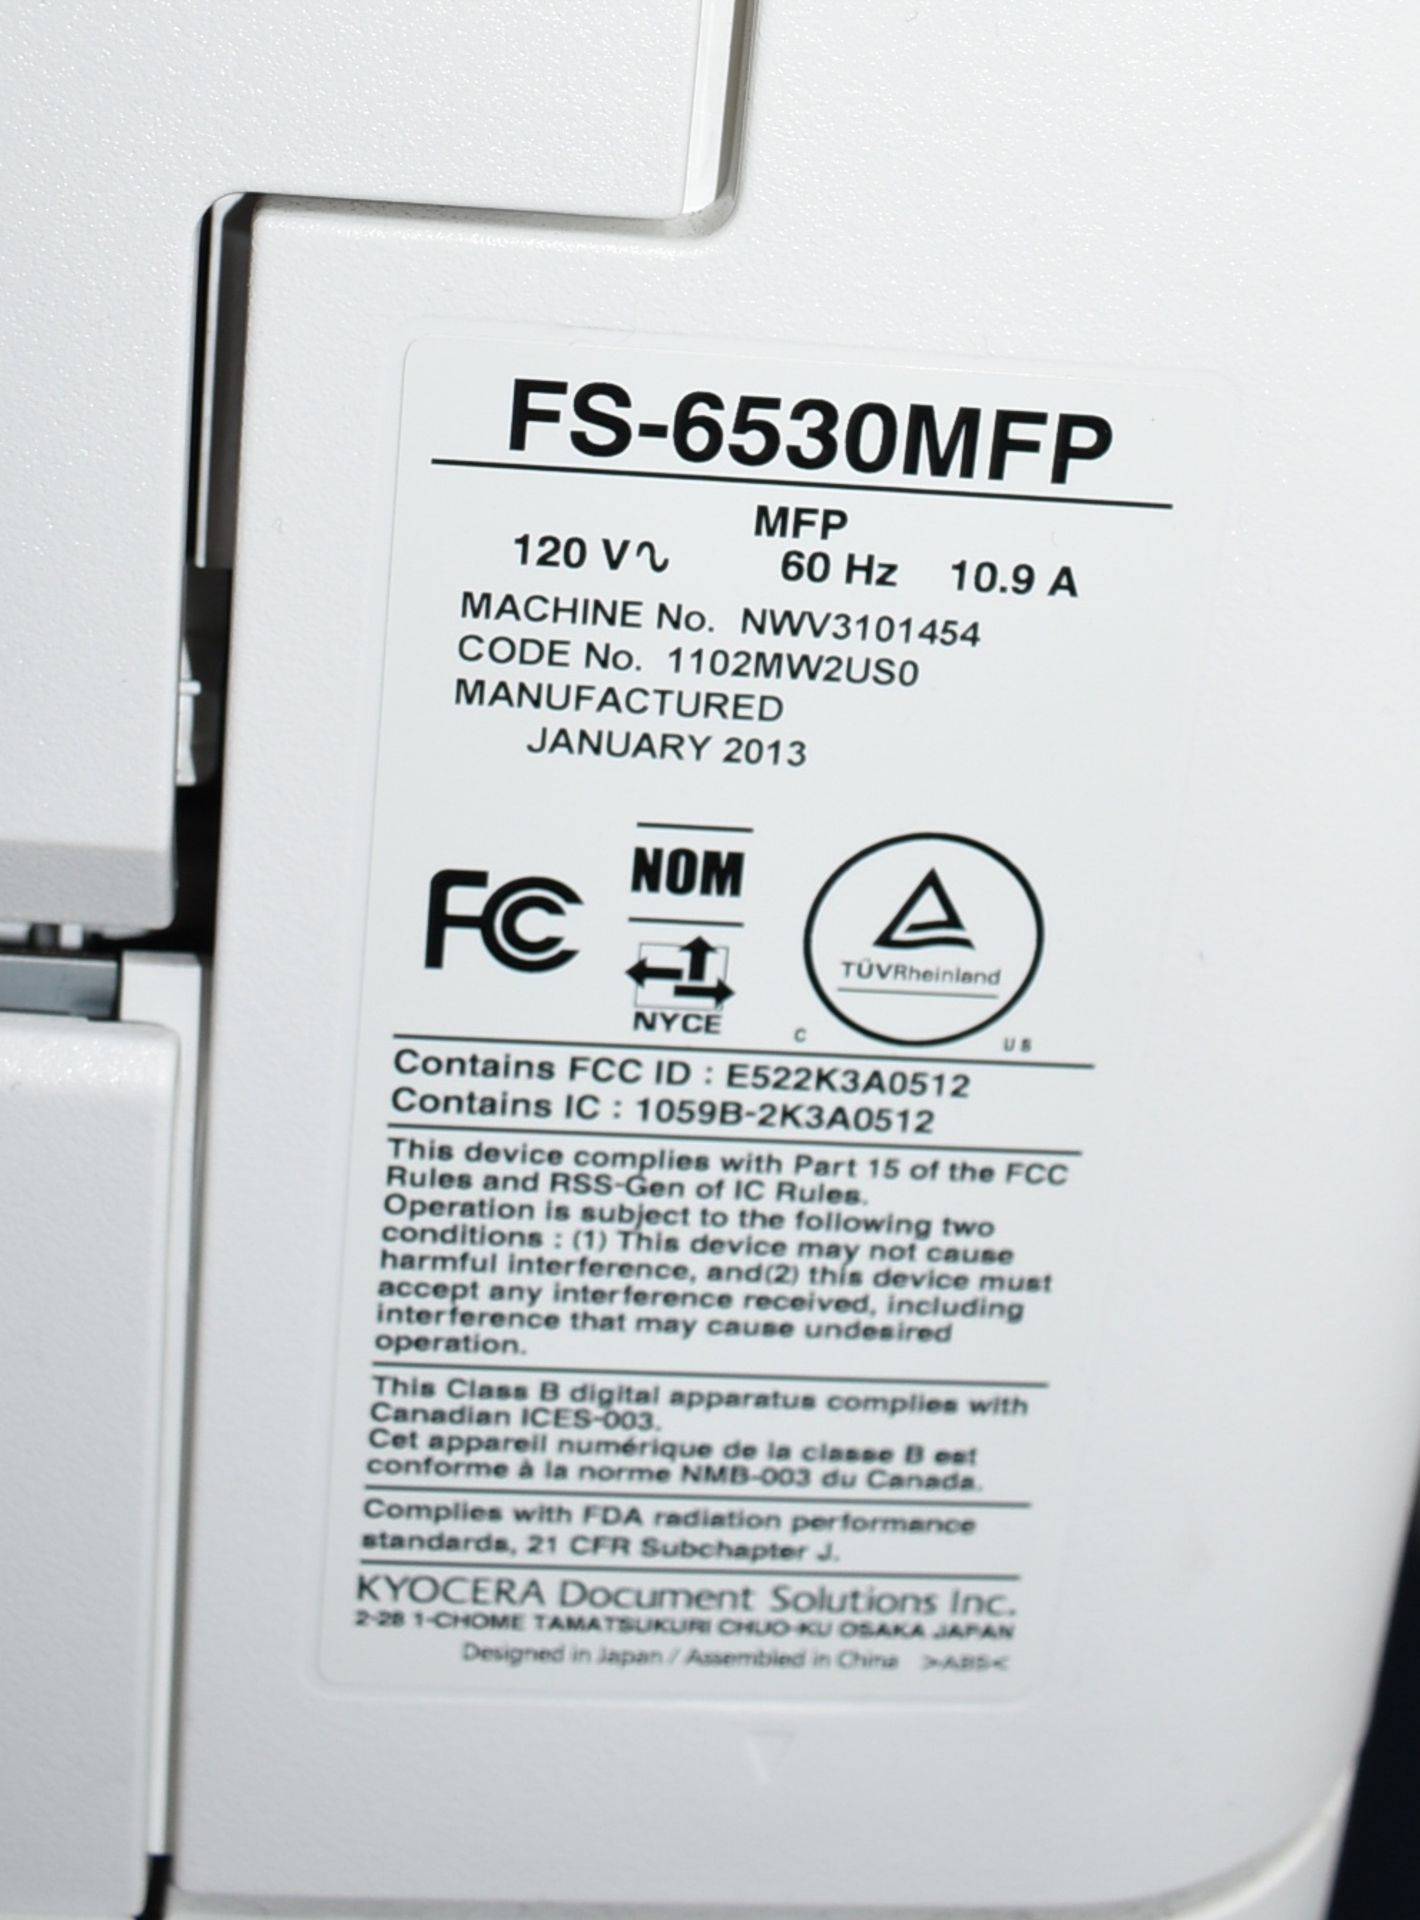 KYOCERA (2013) FS-6530MFP multi-function printer/photocopier, s/n: NWV3101454 - Image 3 of 3